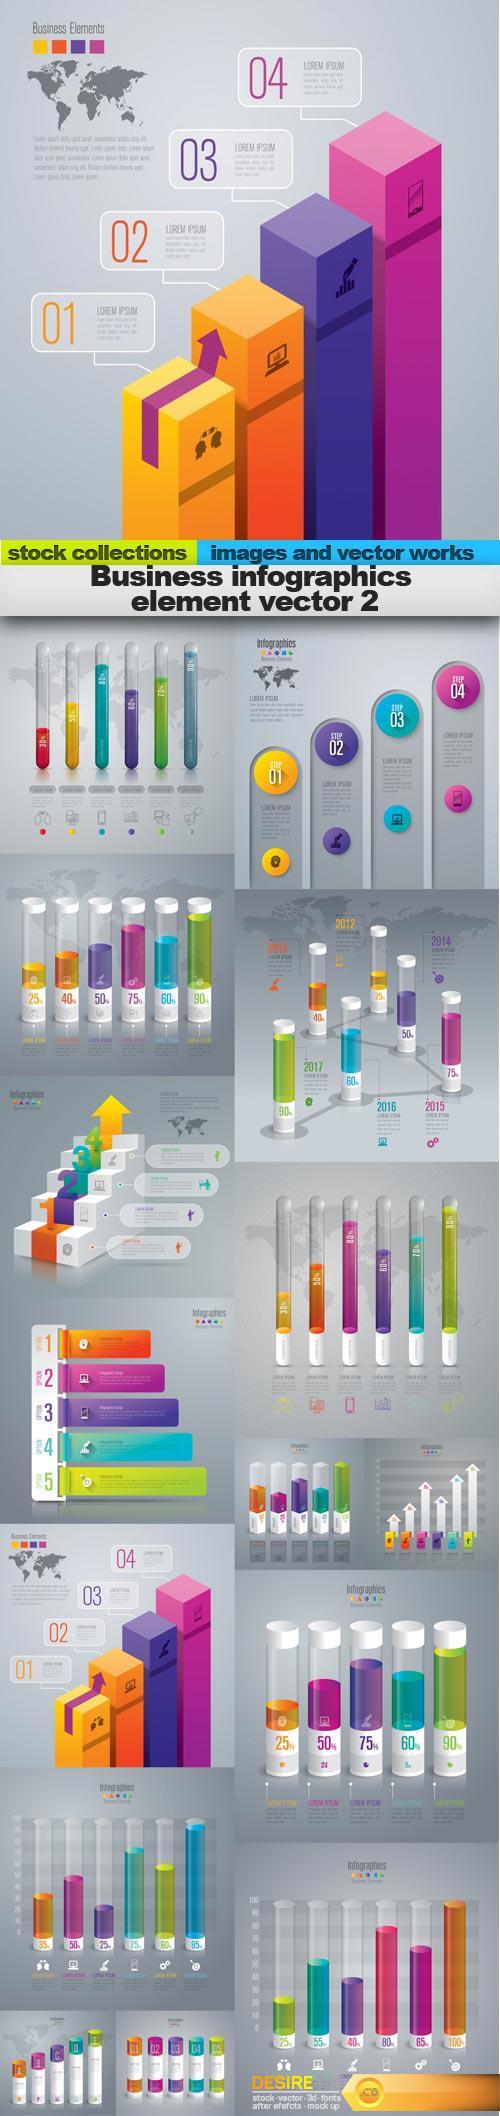 Business infographics element vector 2, 15 x EPS